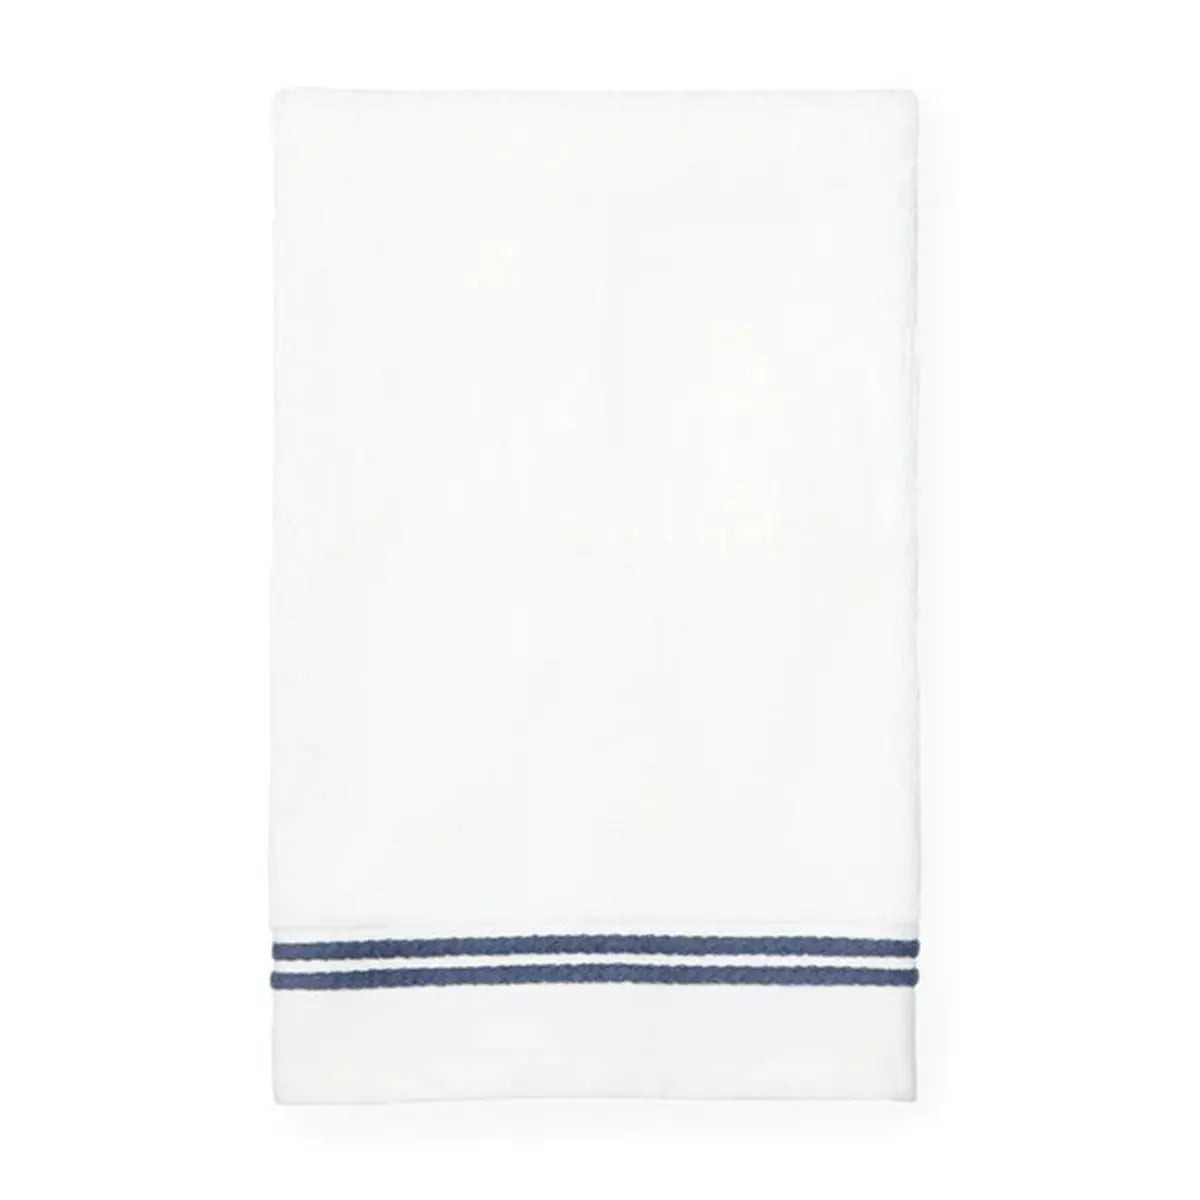 Sferra Aura Bath Towel - White/Navy